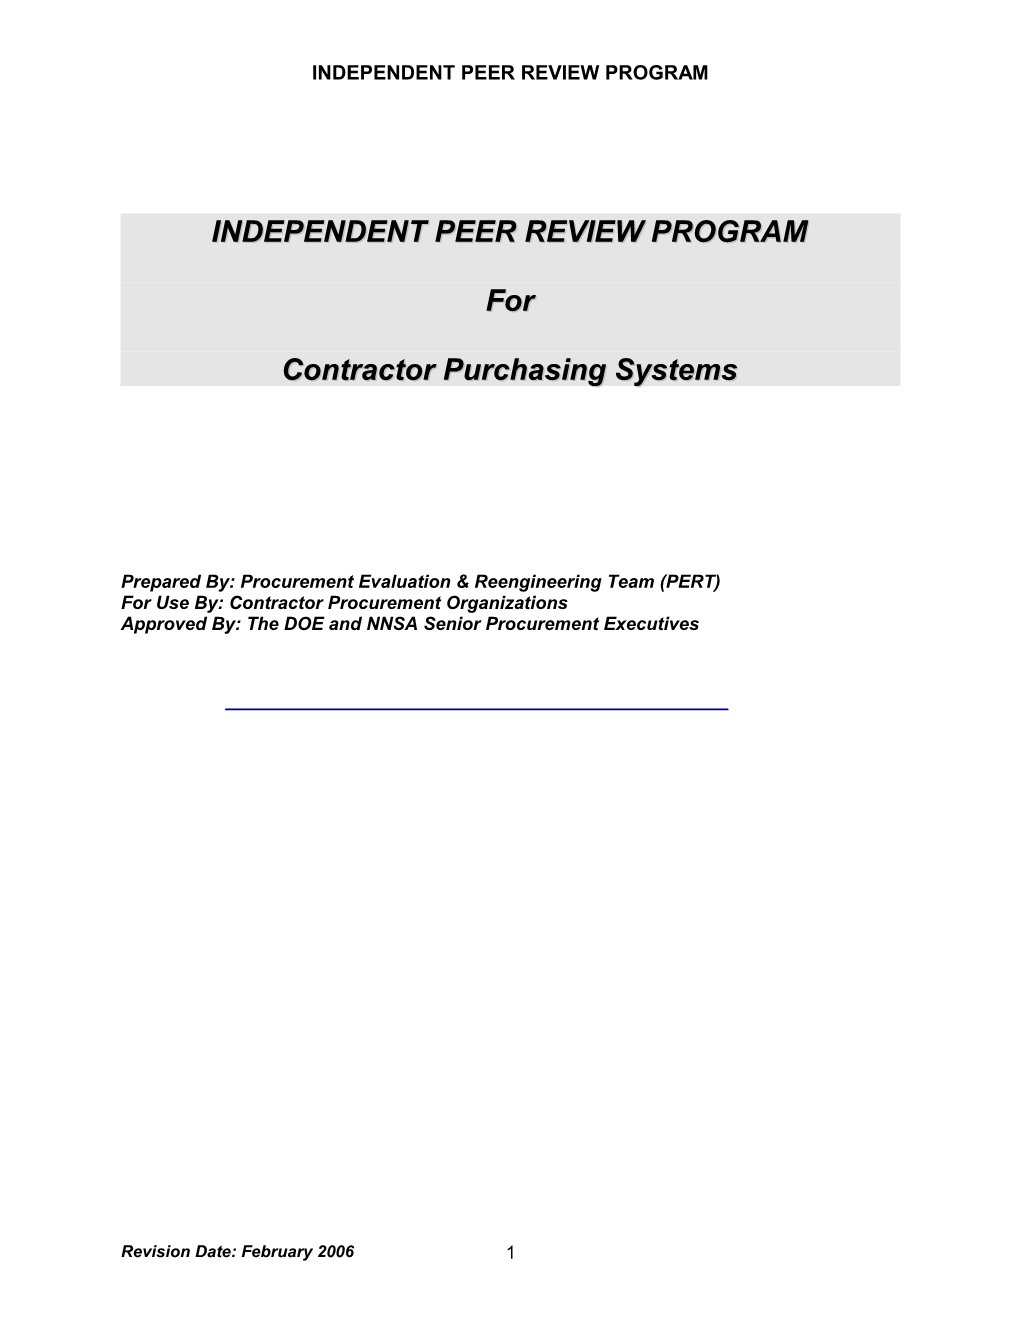 Independent Peer Review Program